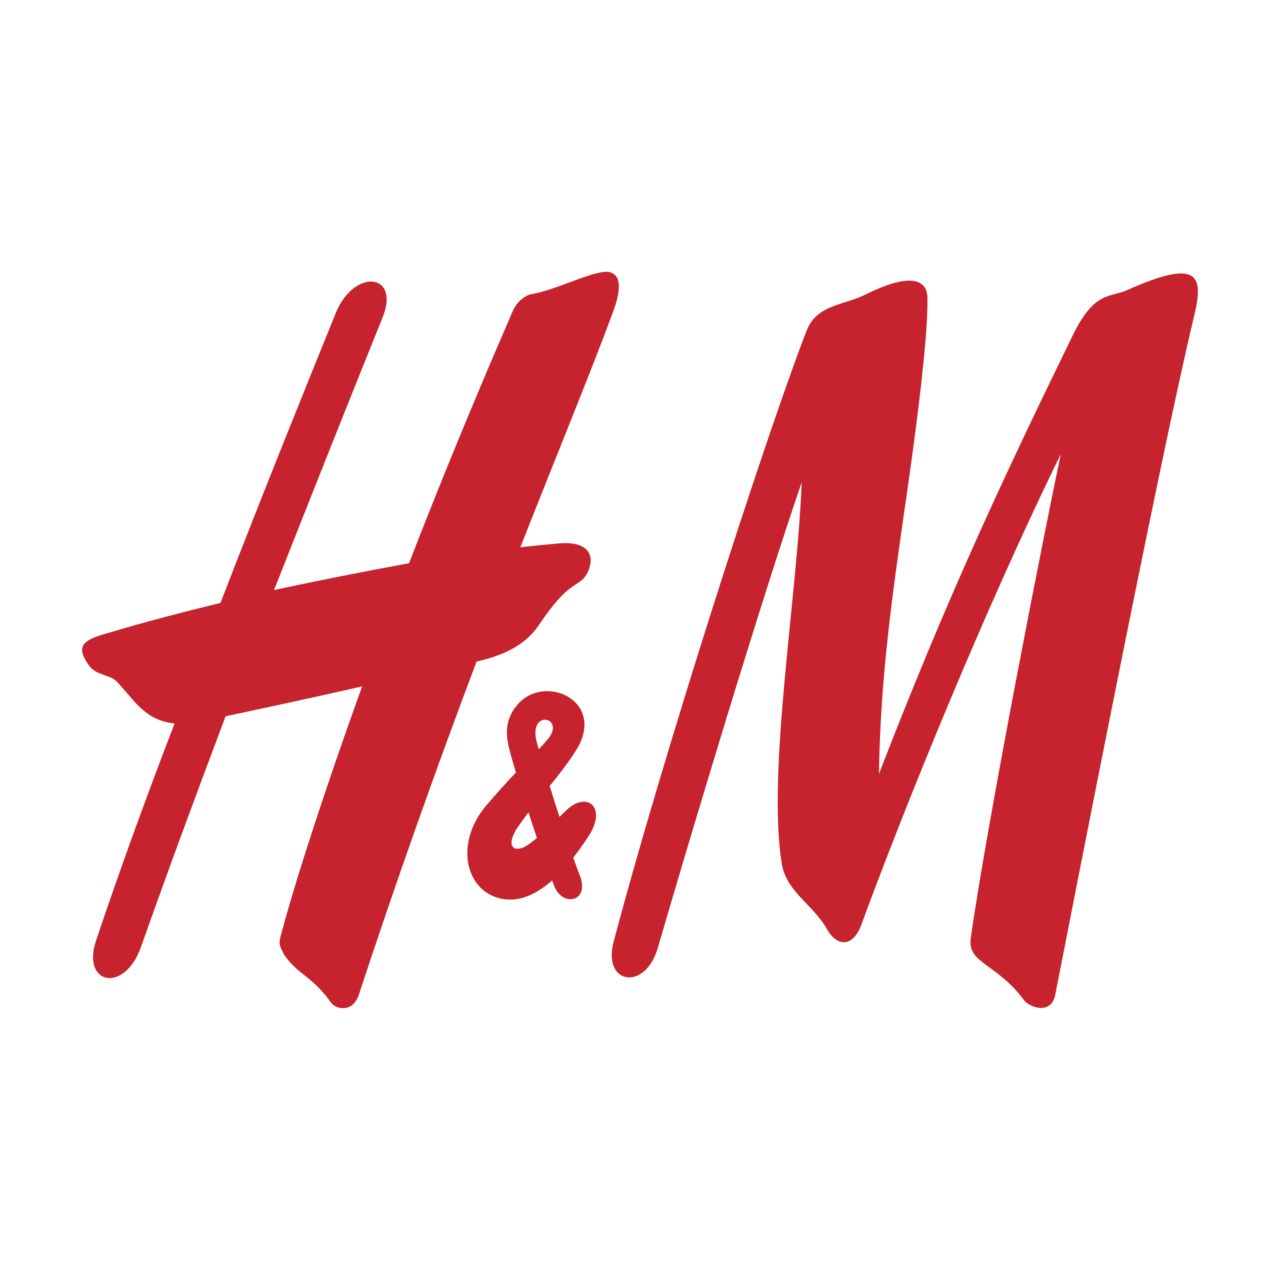 HandM Logo PNG HD Quality